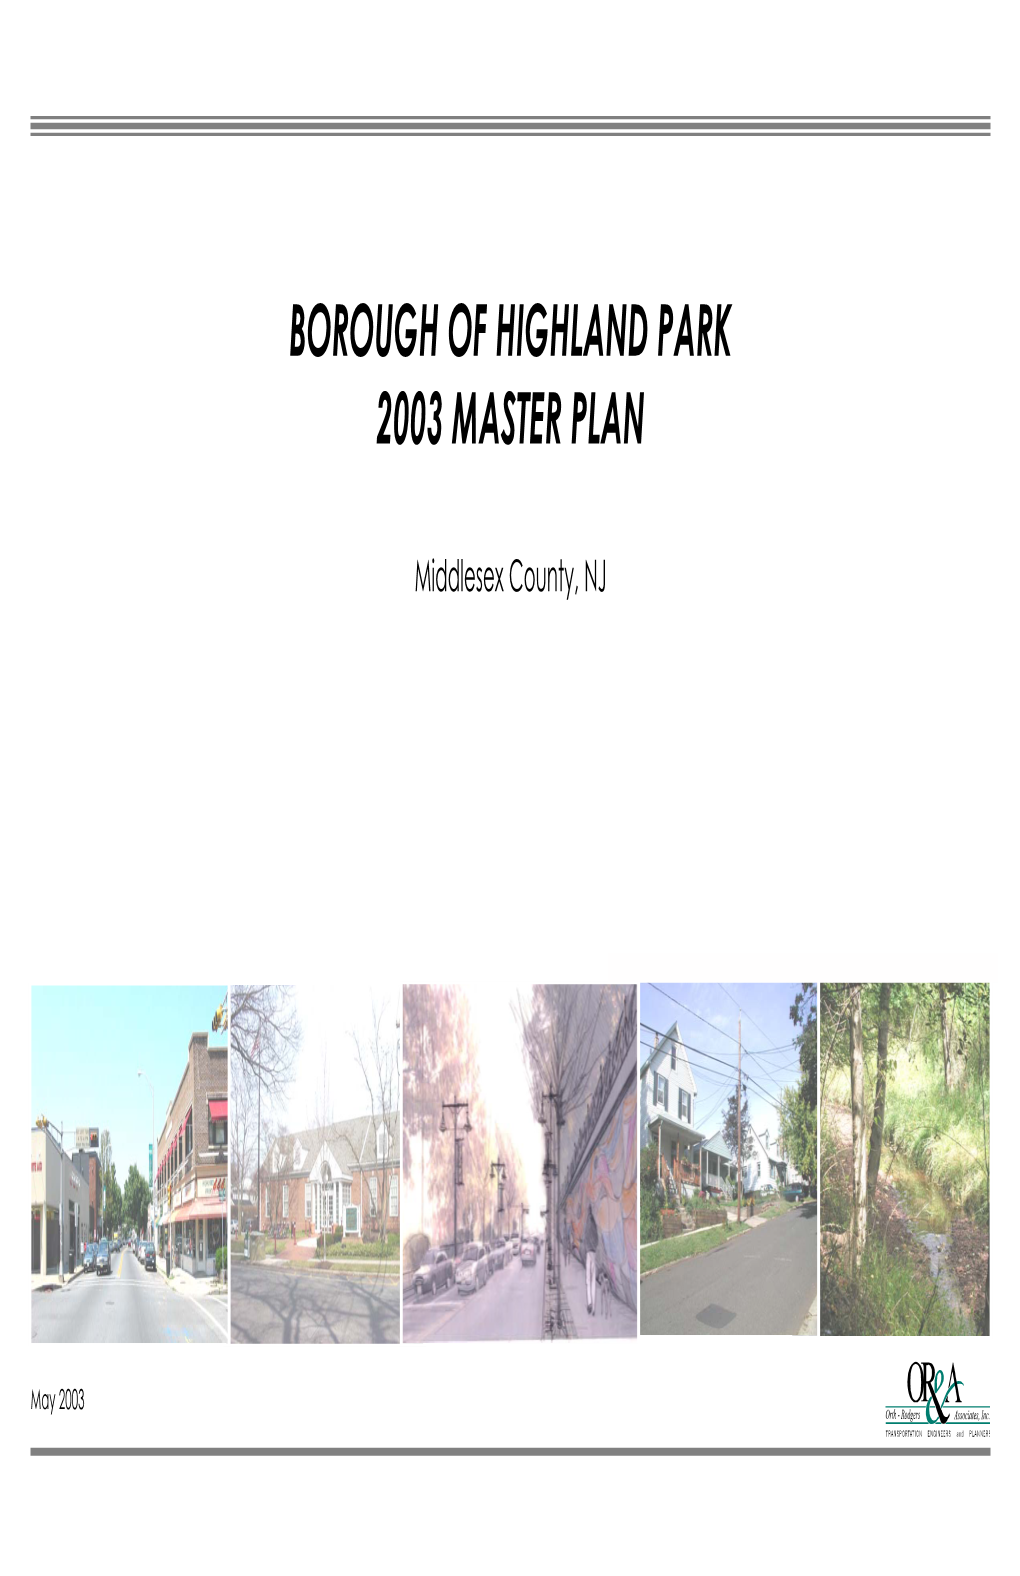 Borough of Highland Park 2003 Master Plan